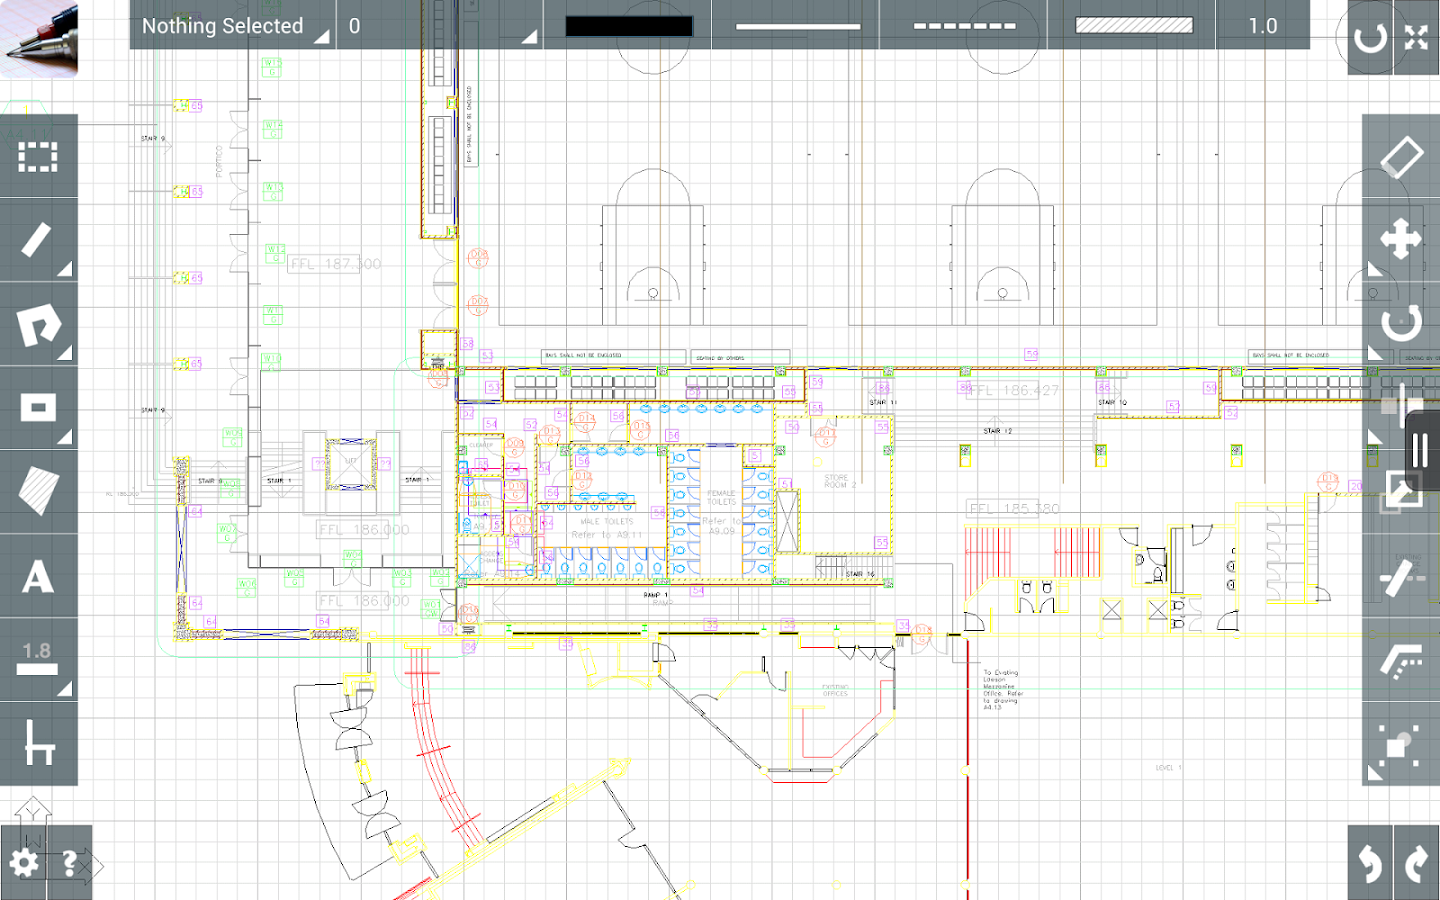 CAD Touch Pro - screenshot